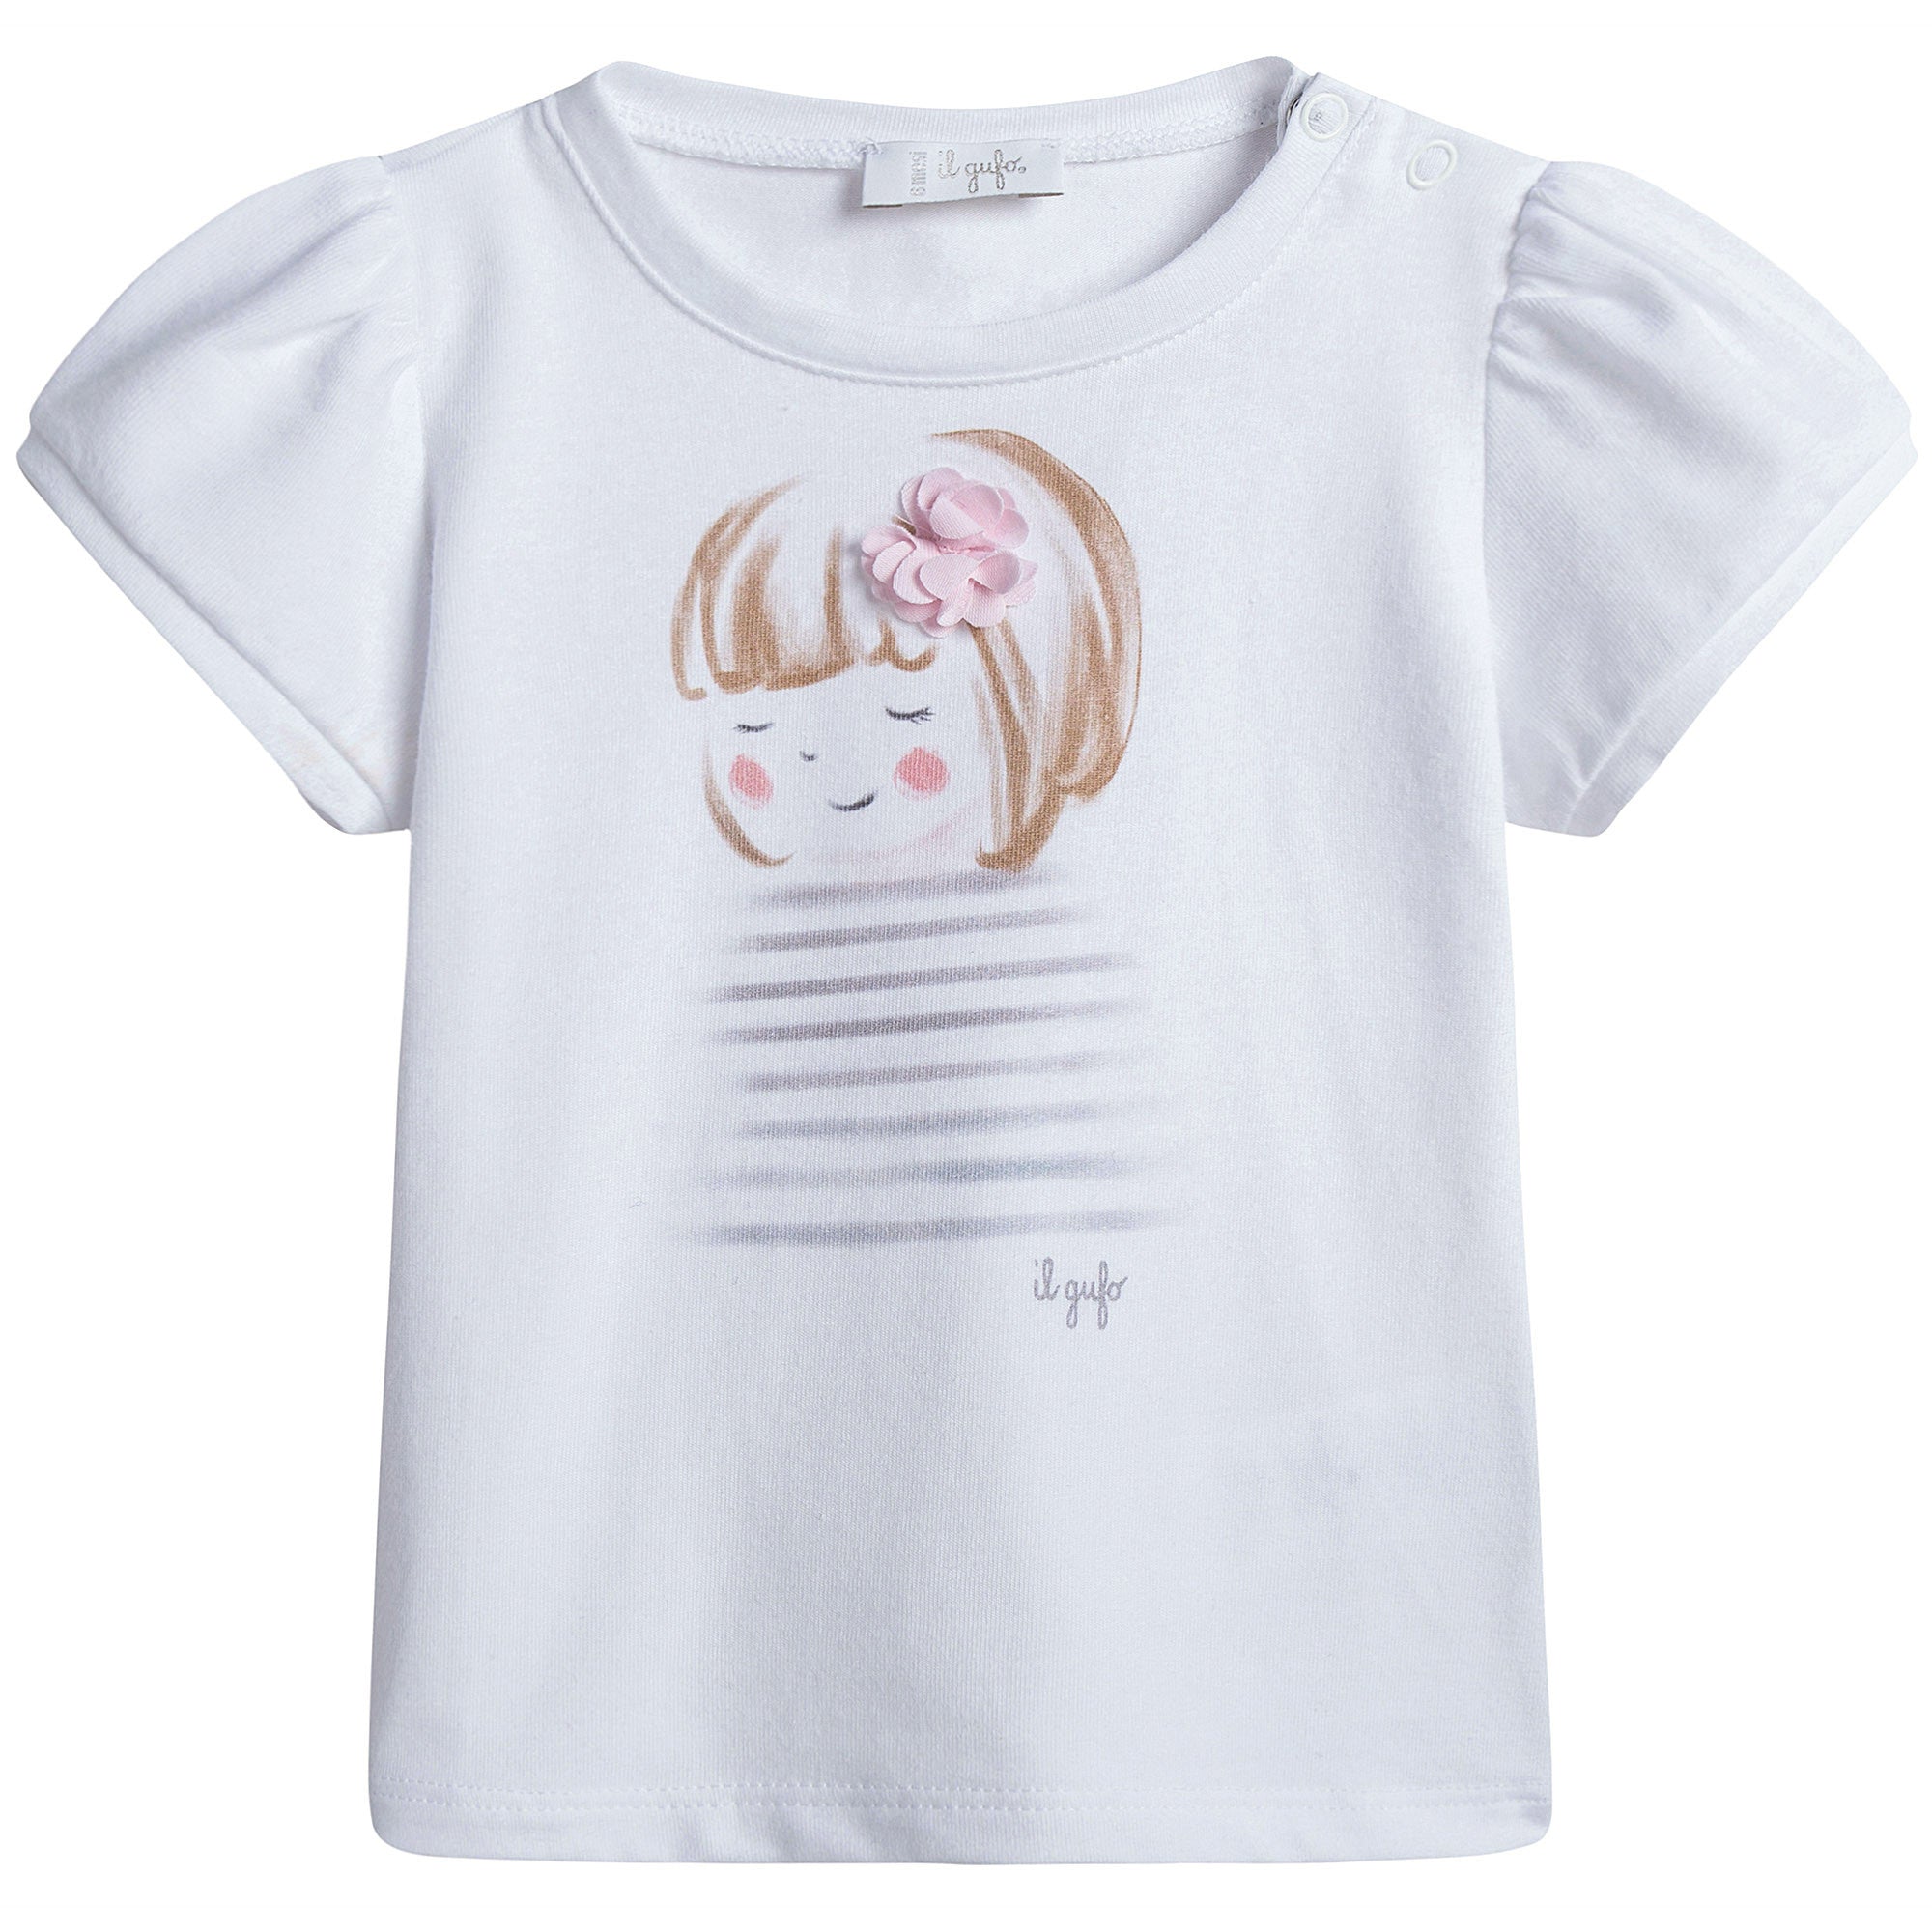 Baby Girls White Cotton Jersey T-Shirt - CÉMAROSE | Children's Fashion Store - 1